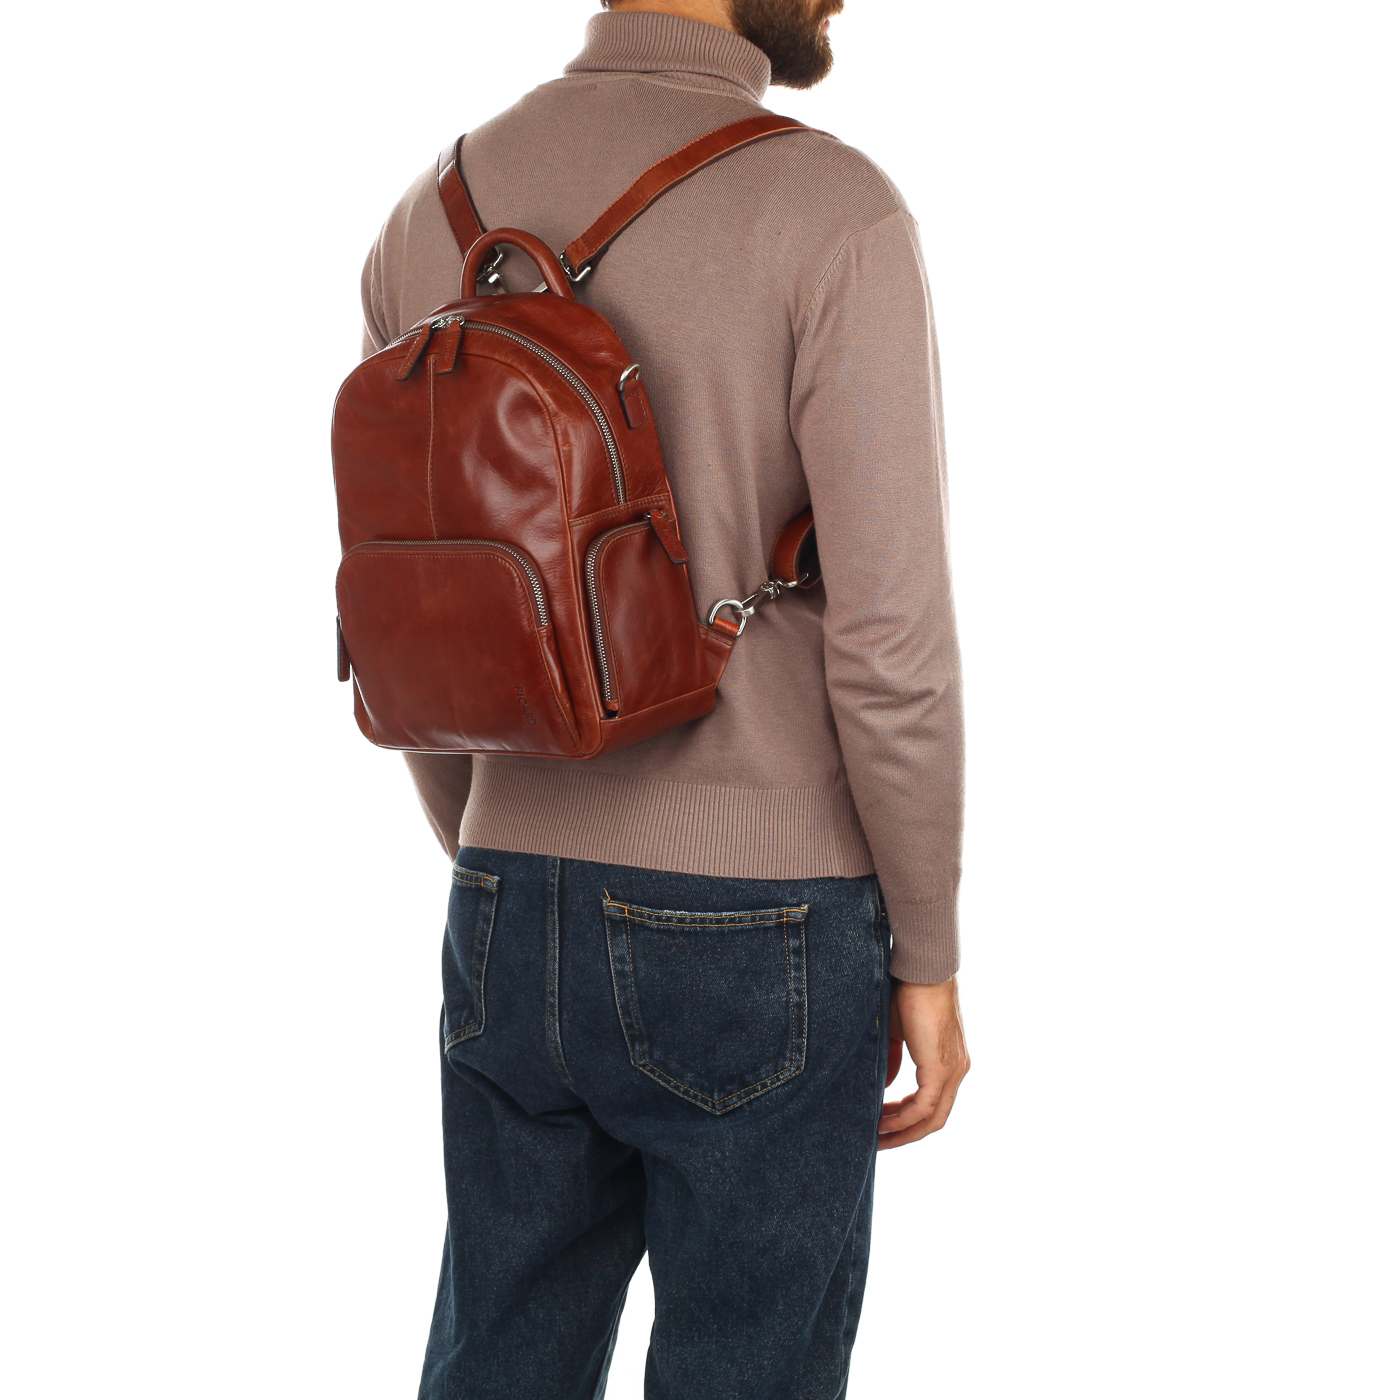 Рюкзак со съемными плечевыми лямками Picard Buddy